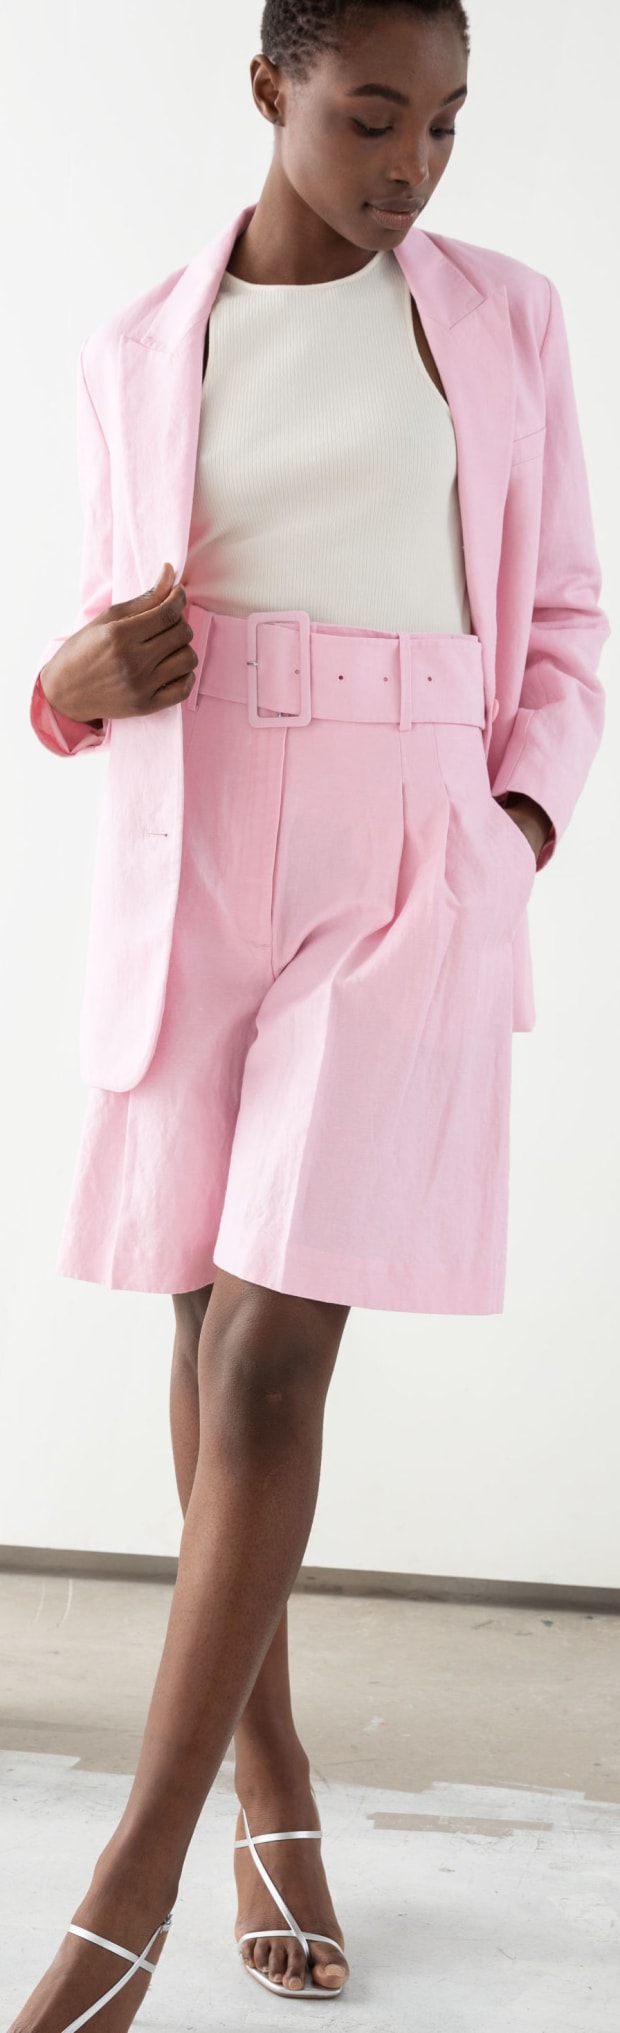 pink blazer and shorts